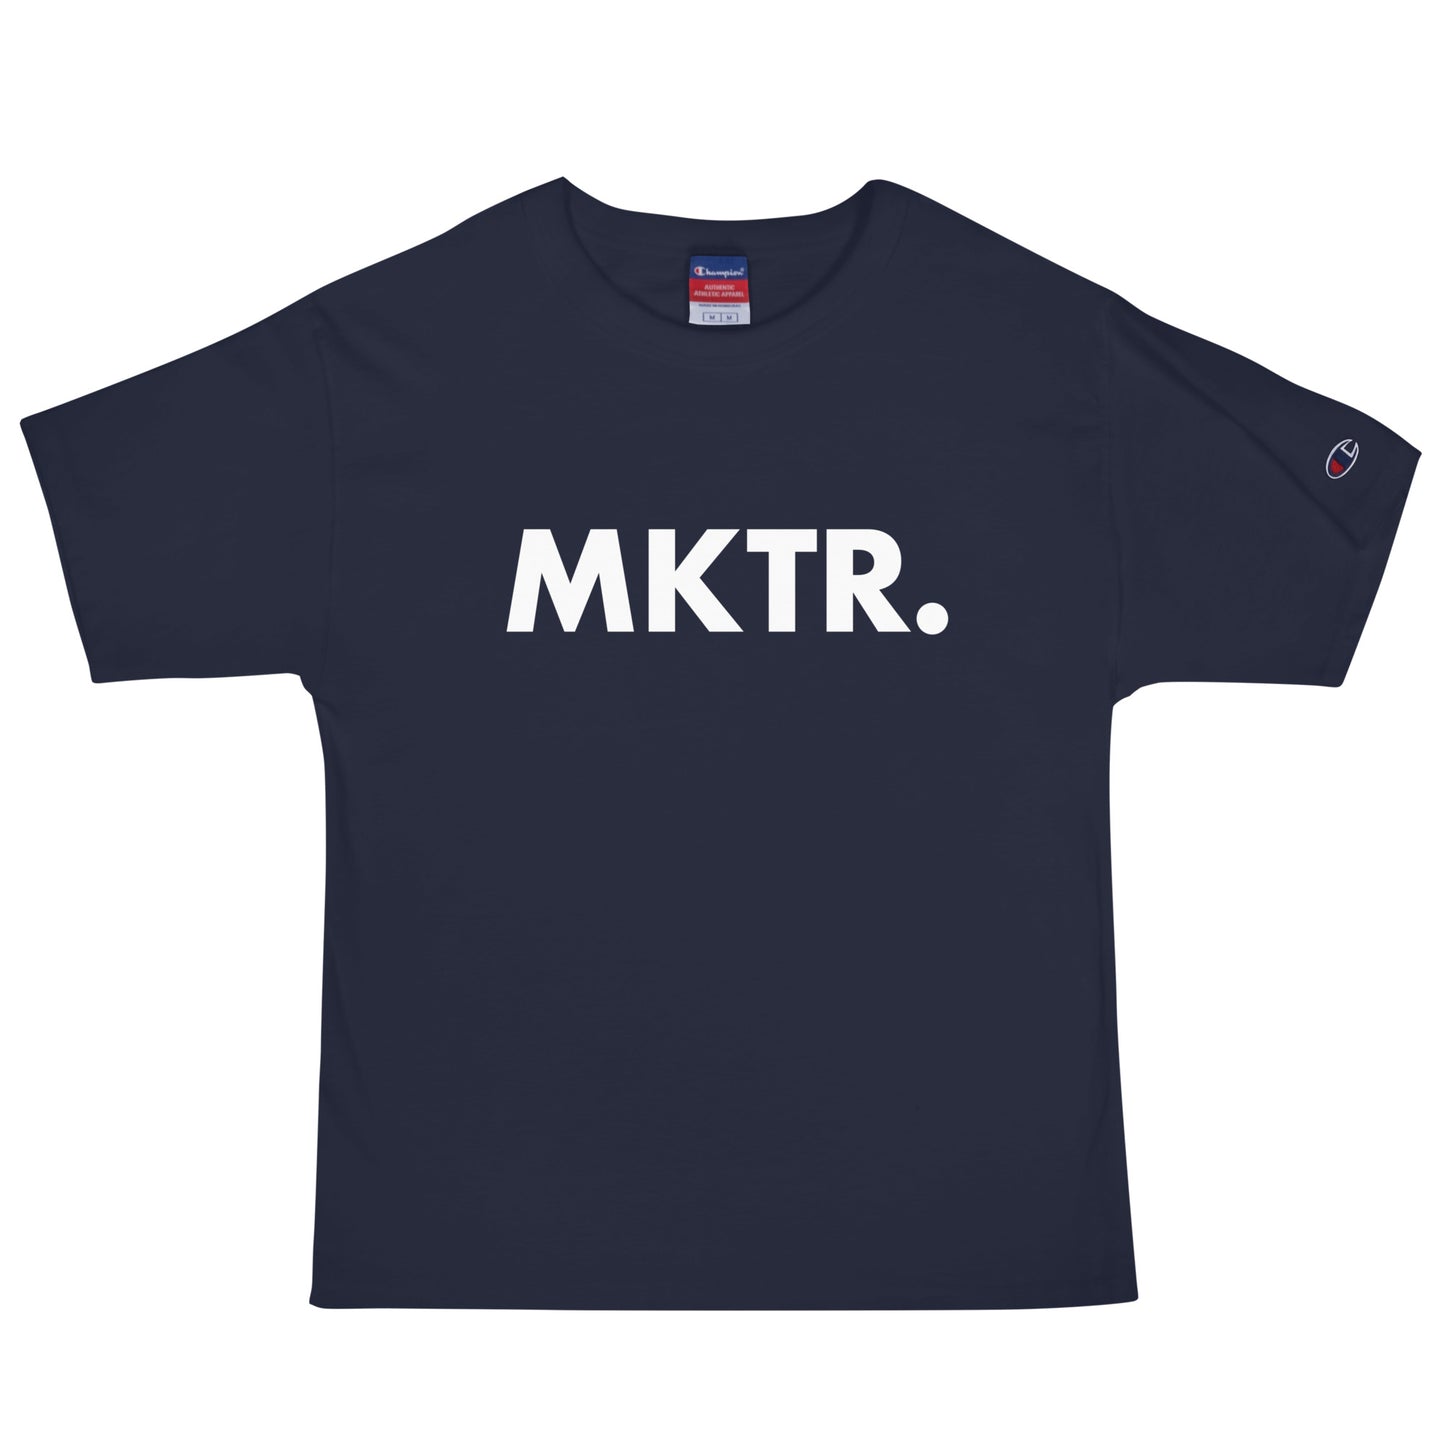 MKTR. Champion T-Shirt